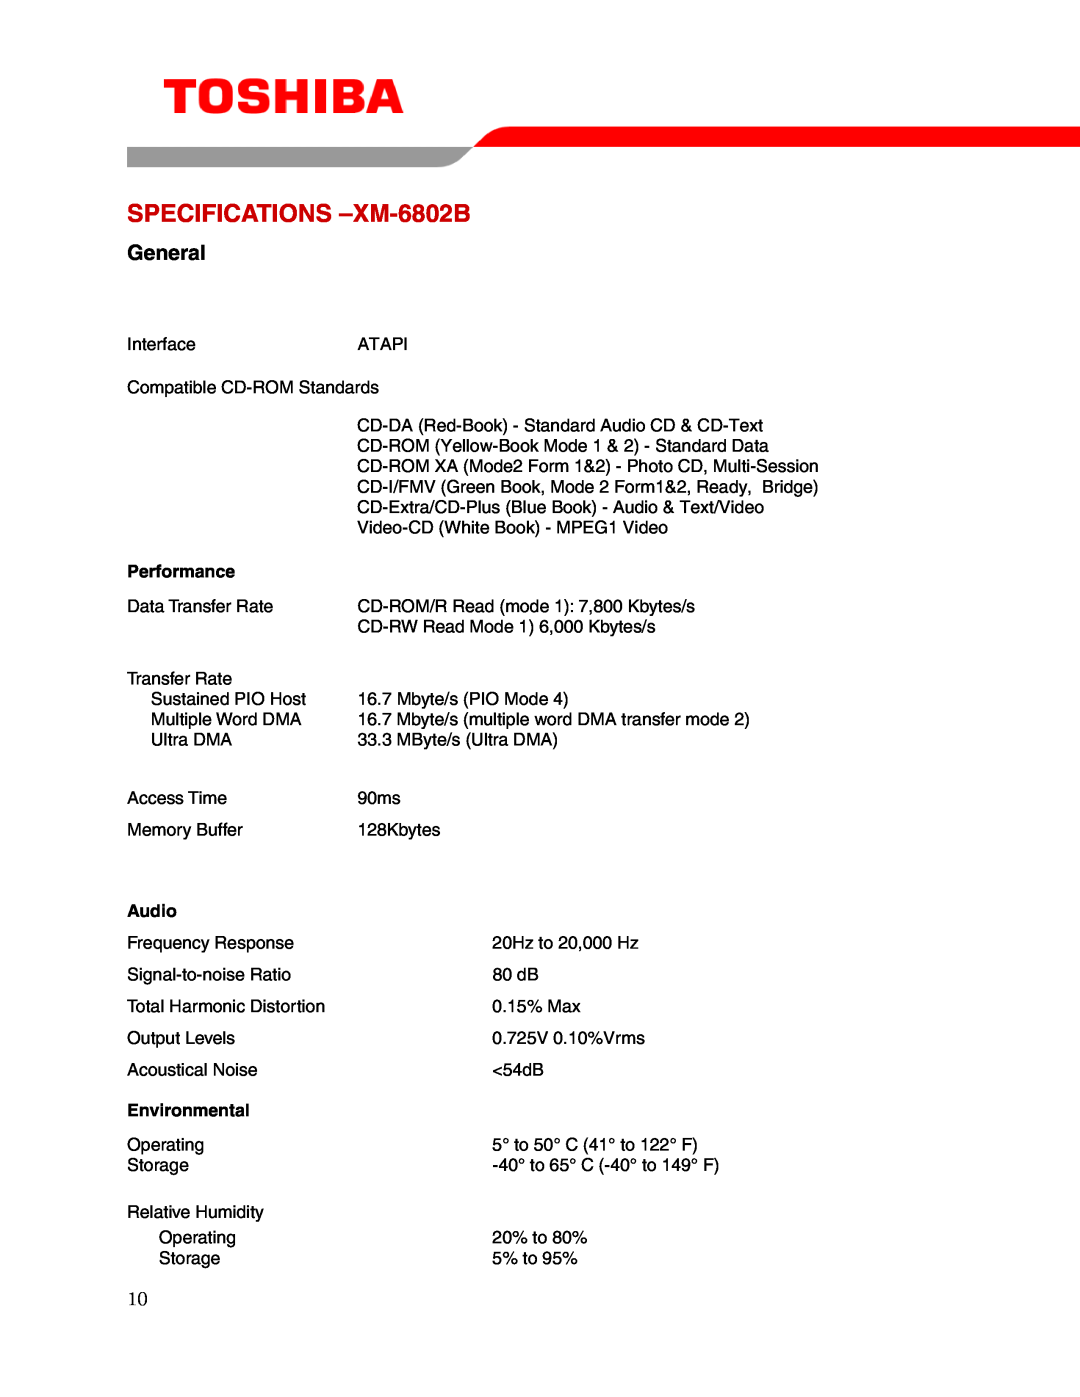 Toshiba user manual SPECIFICATIONS -XM-6802B, General, Performance, Audio, Environmental 